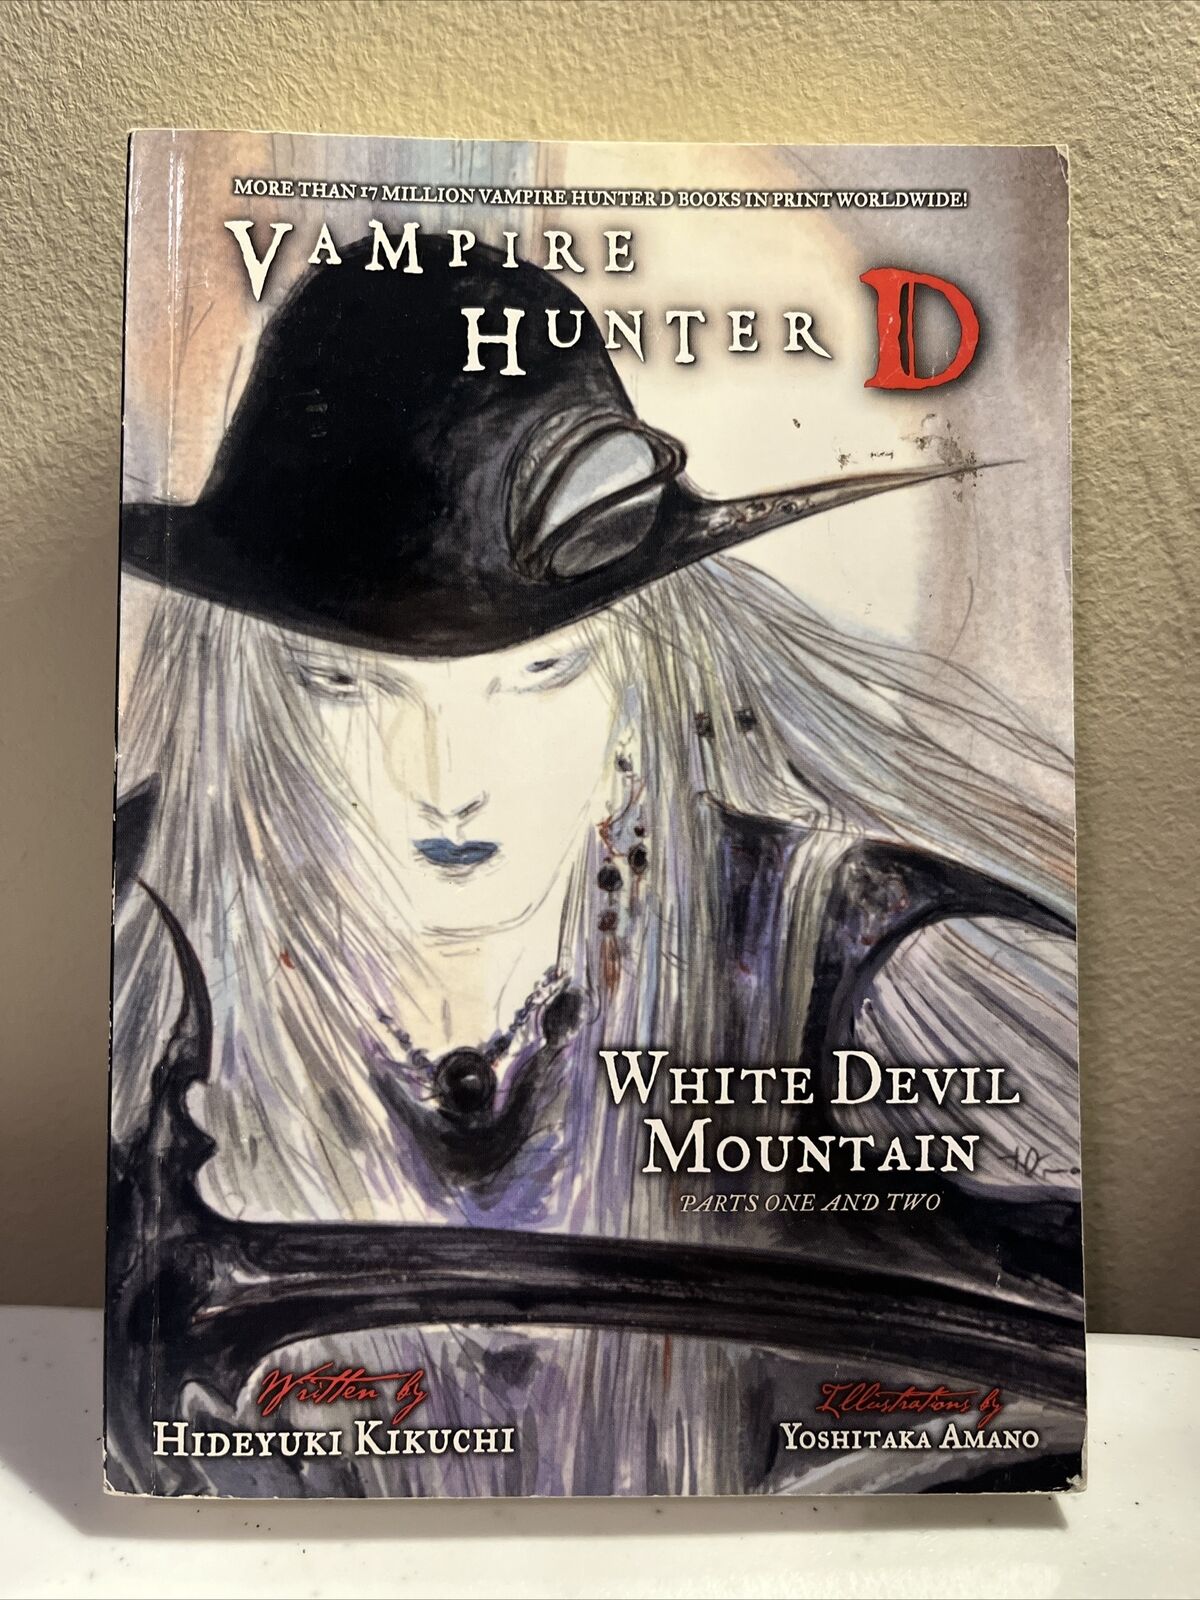 Vampire Hunter D Vol. 22 English Novel White Devil Mountain part 1 and 2 RARE